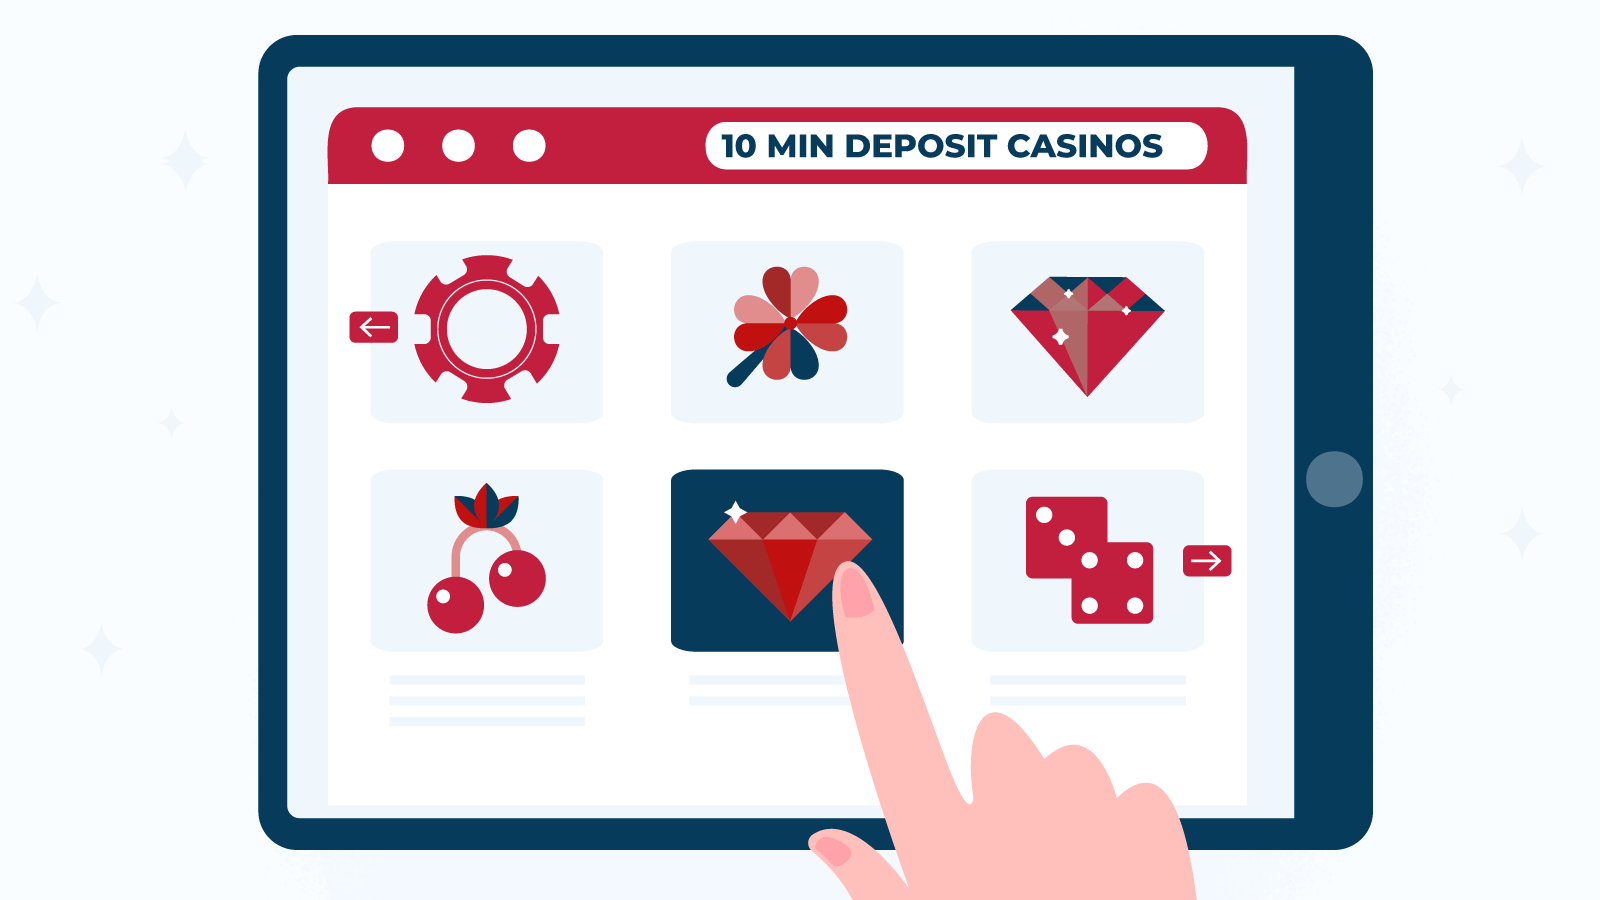 How to Choose Between 10 Min Deposit Casinos